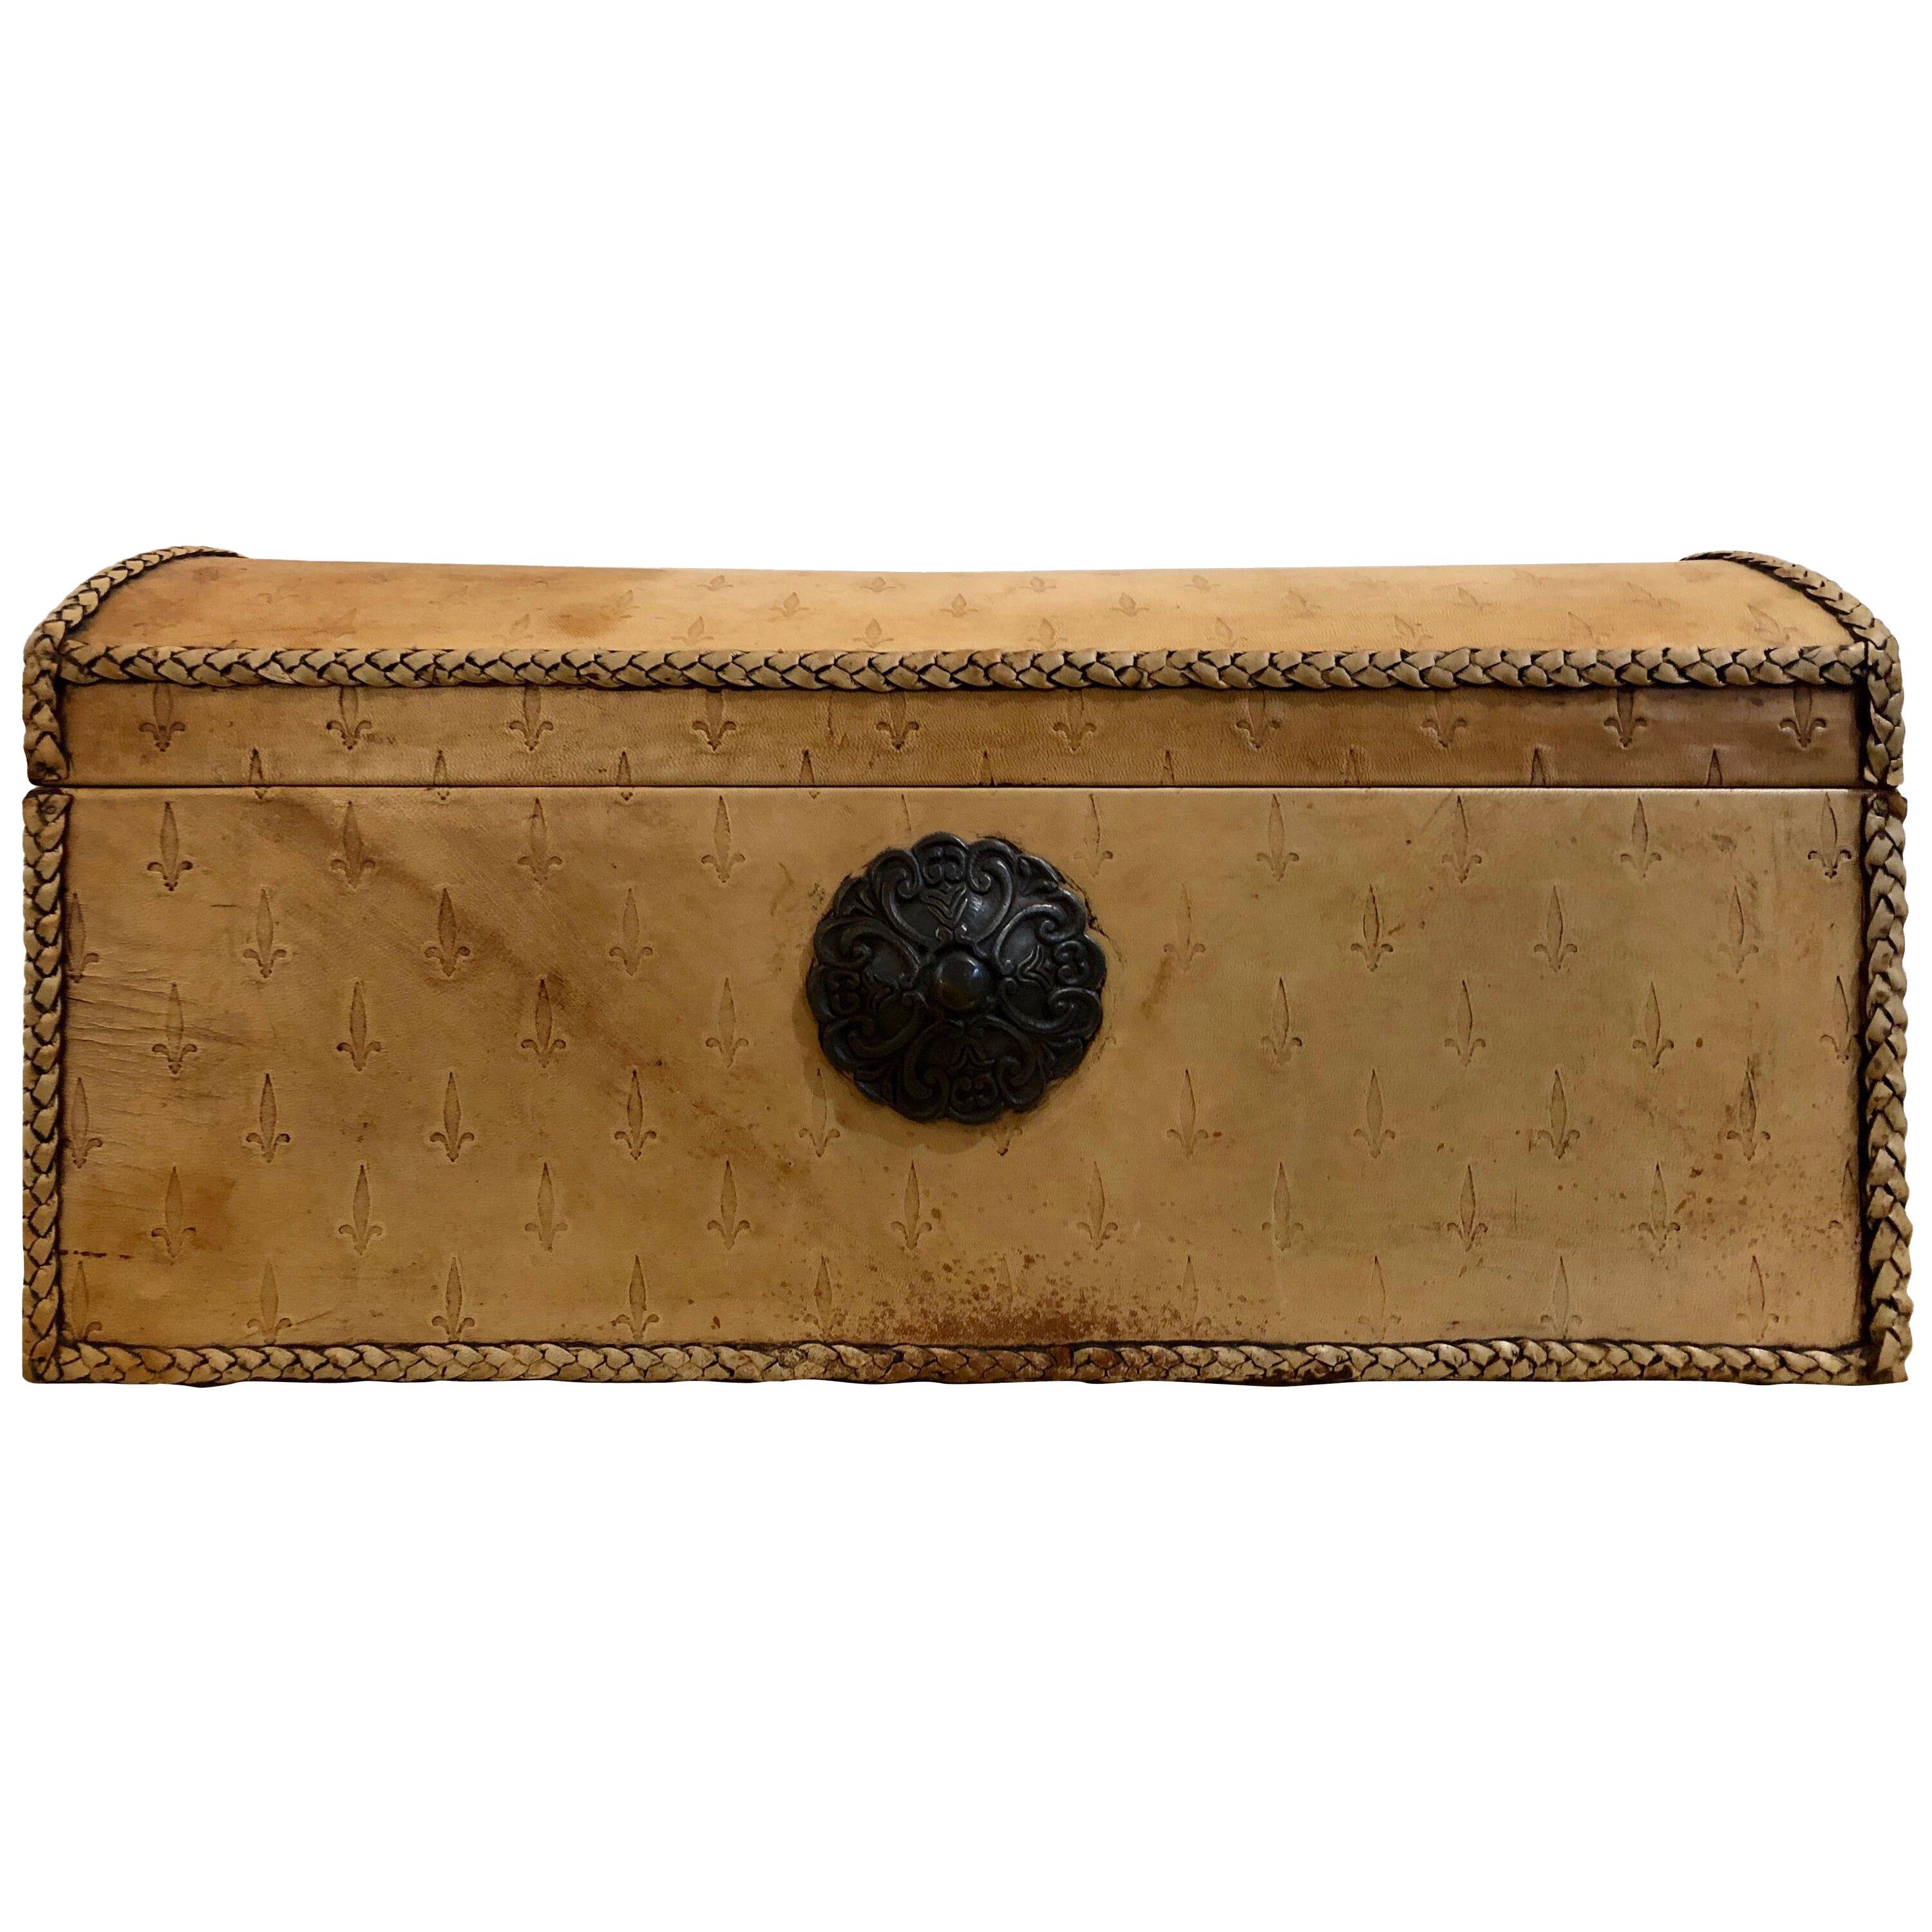 Decorative Leather Jewelry Box with a Key